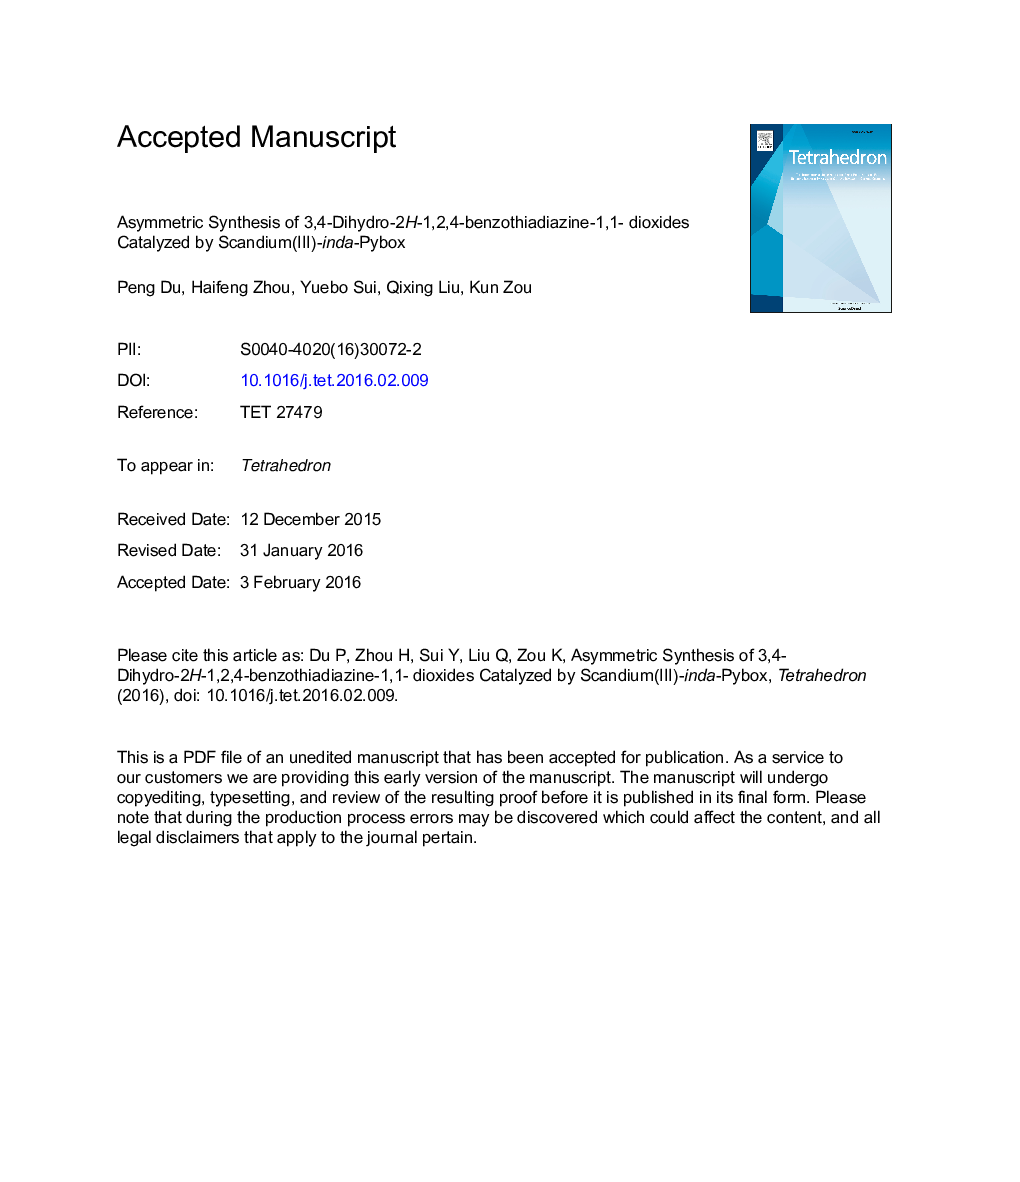 Asymmetric synthesis of 3,4-dihydro-2H-1,2,4-benzothiadiazine-1,1- dioxides catalyzed by scandium(III)-inda-Pybox